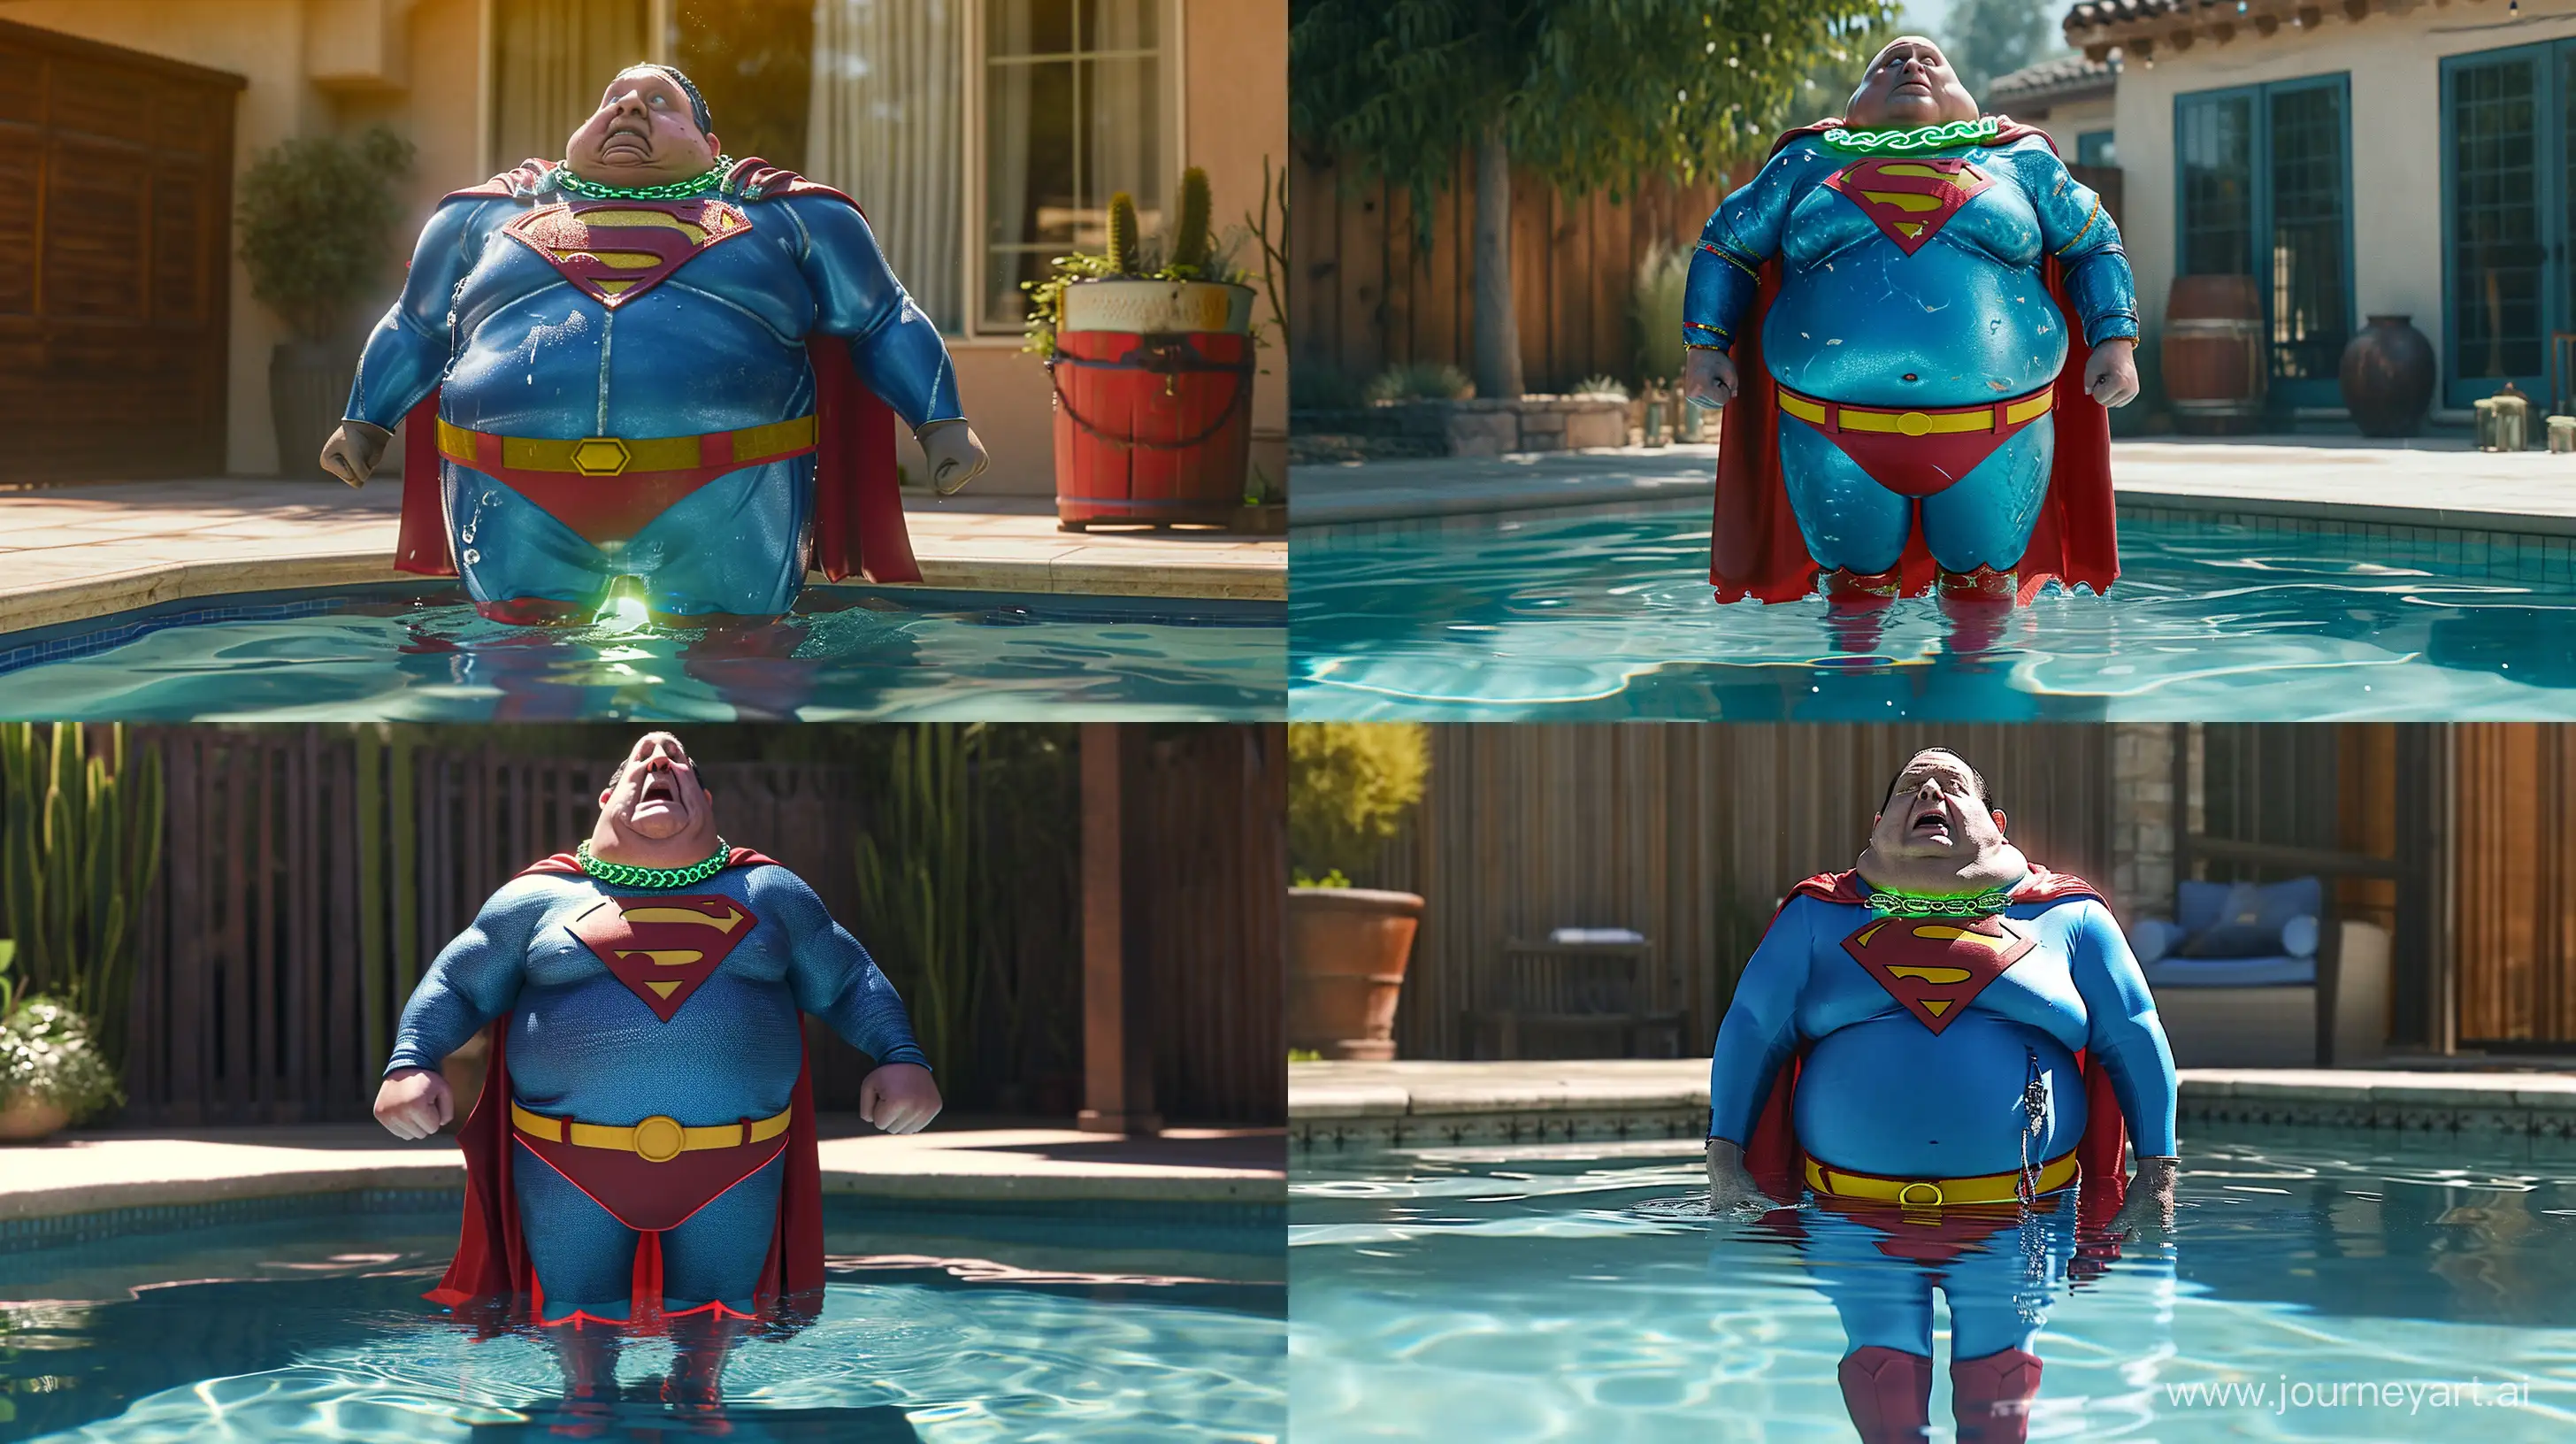 Elderly-Superman-Drowning-in-Shallow-Pool-Unusual-Outdoor-Scene